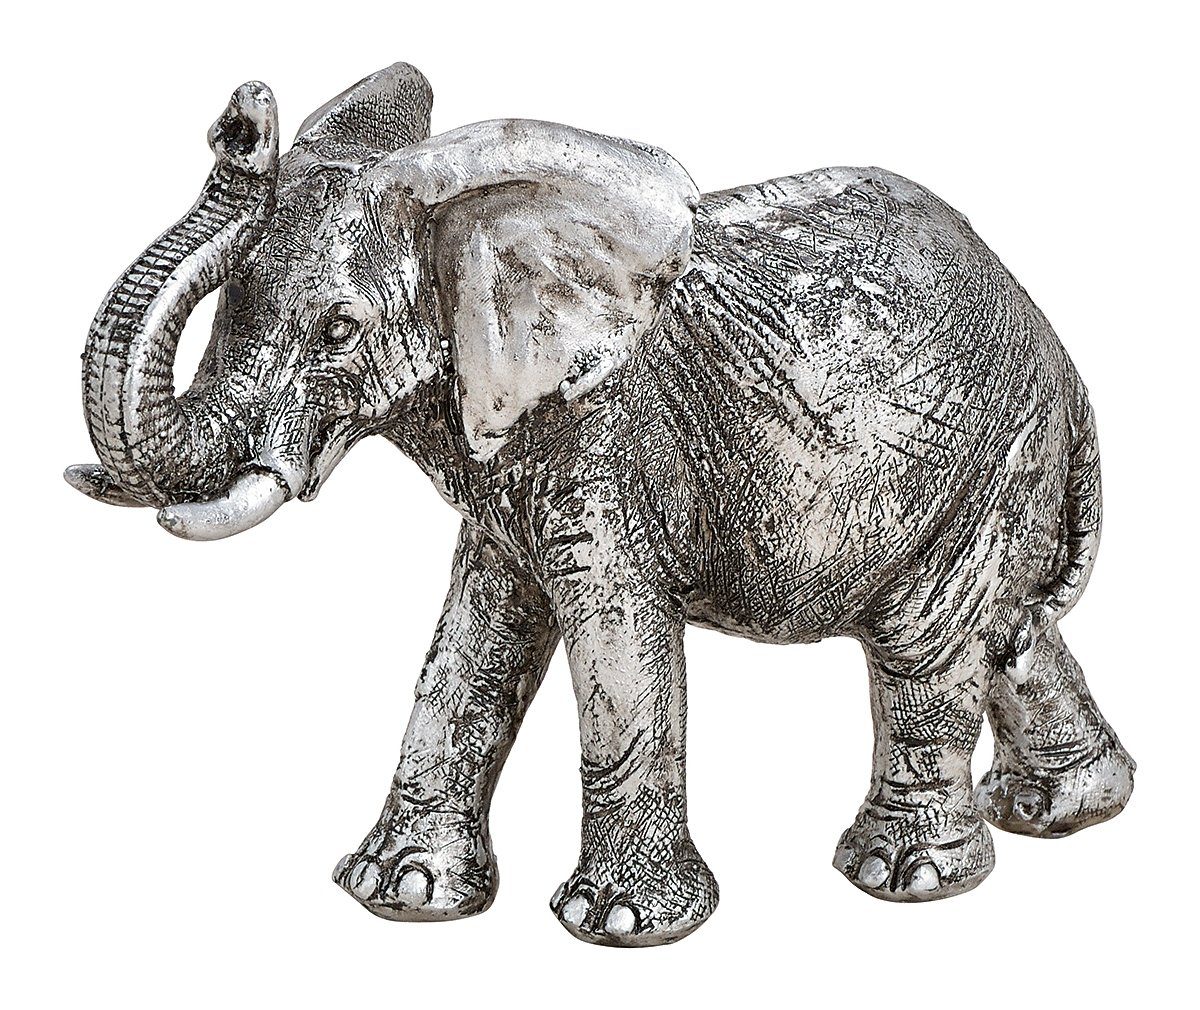 B silber, NAME Sammlerfigur, Elefant-Figur, Baby-Elefant, 16 Weihnachtsfigur cm, Tierfigur Dekofigur, Tierfigur, NO